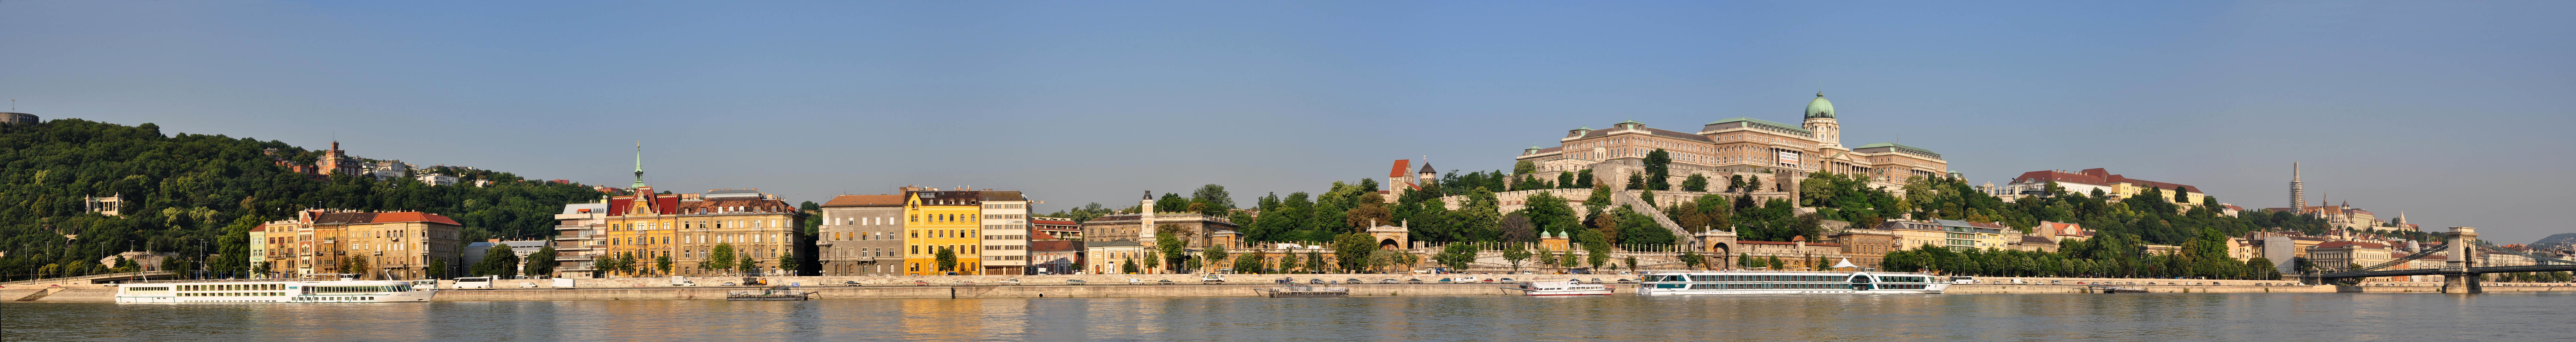 Budapest - Hungary3.jpg